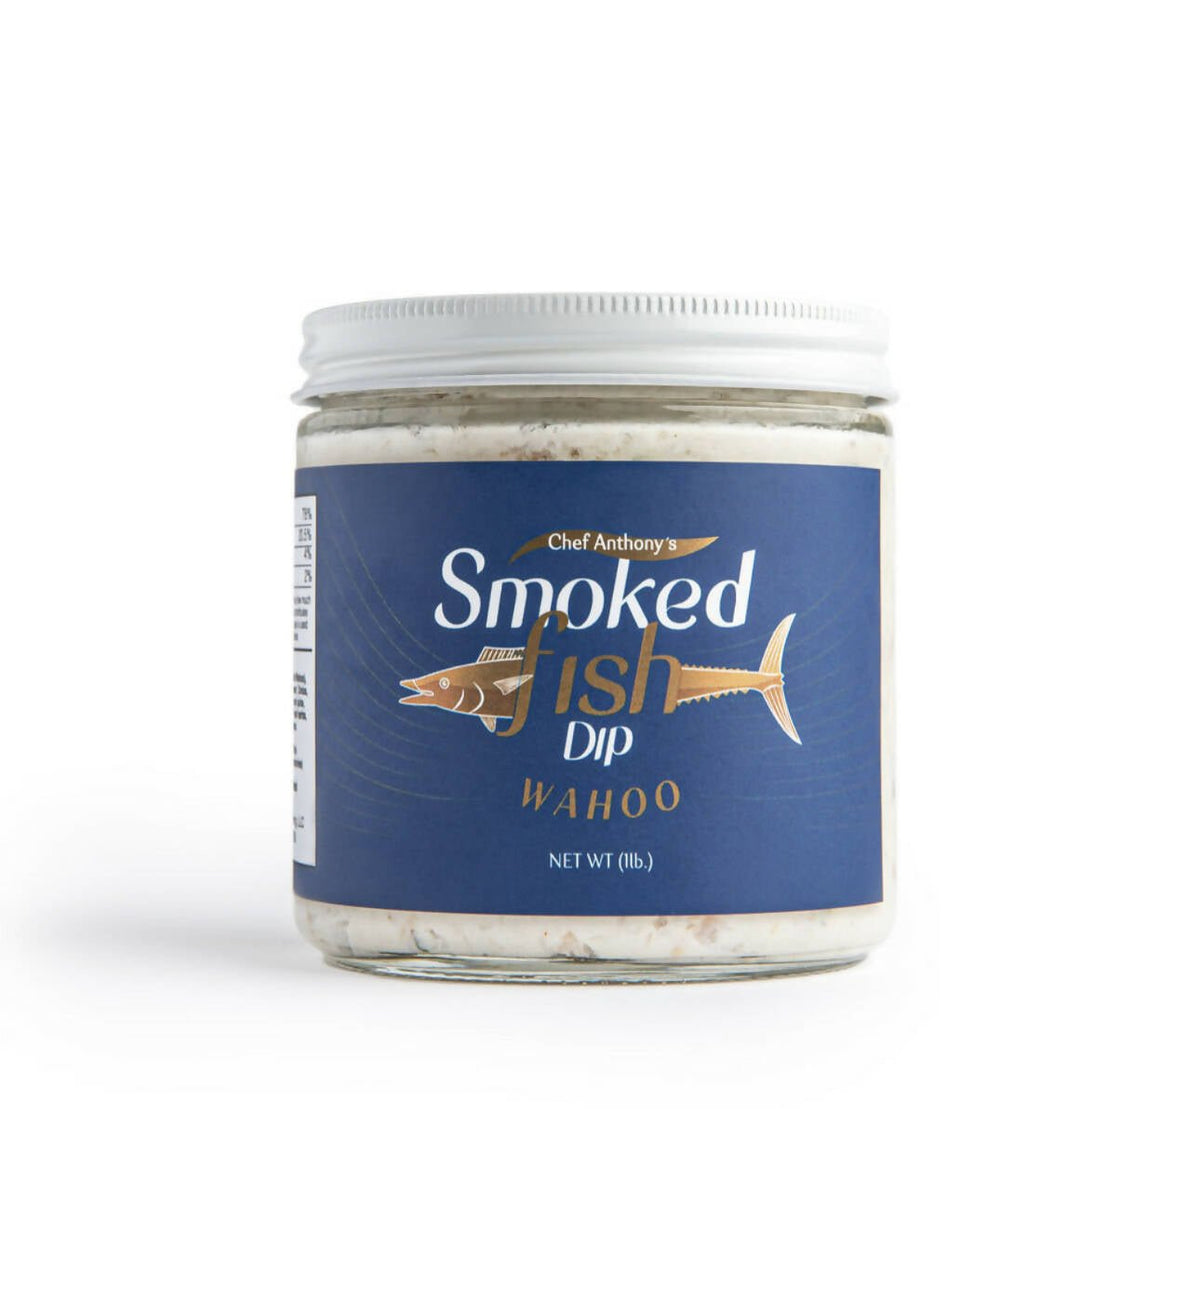 Chef Anthony’s Smoked Fish Dip Jars - 12 jars x 1 LB by Farm2Me